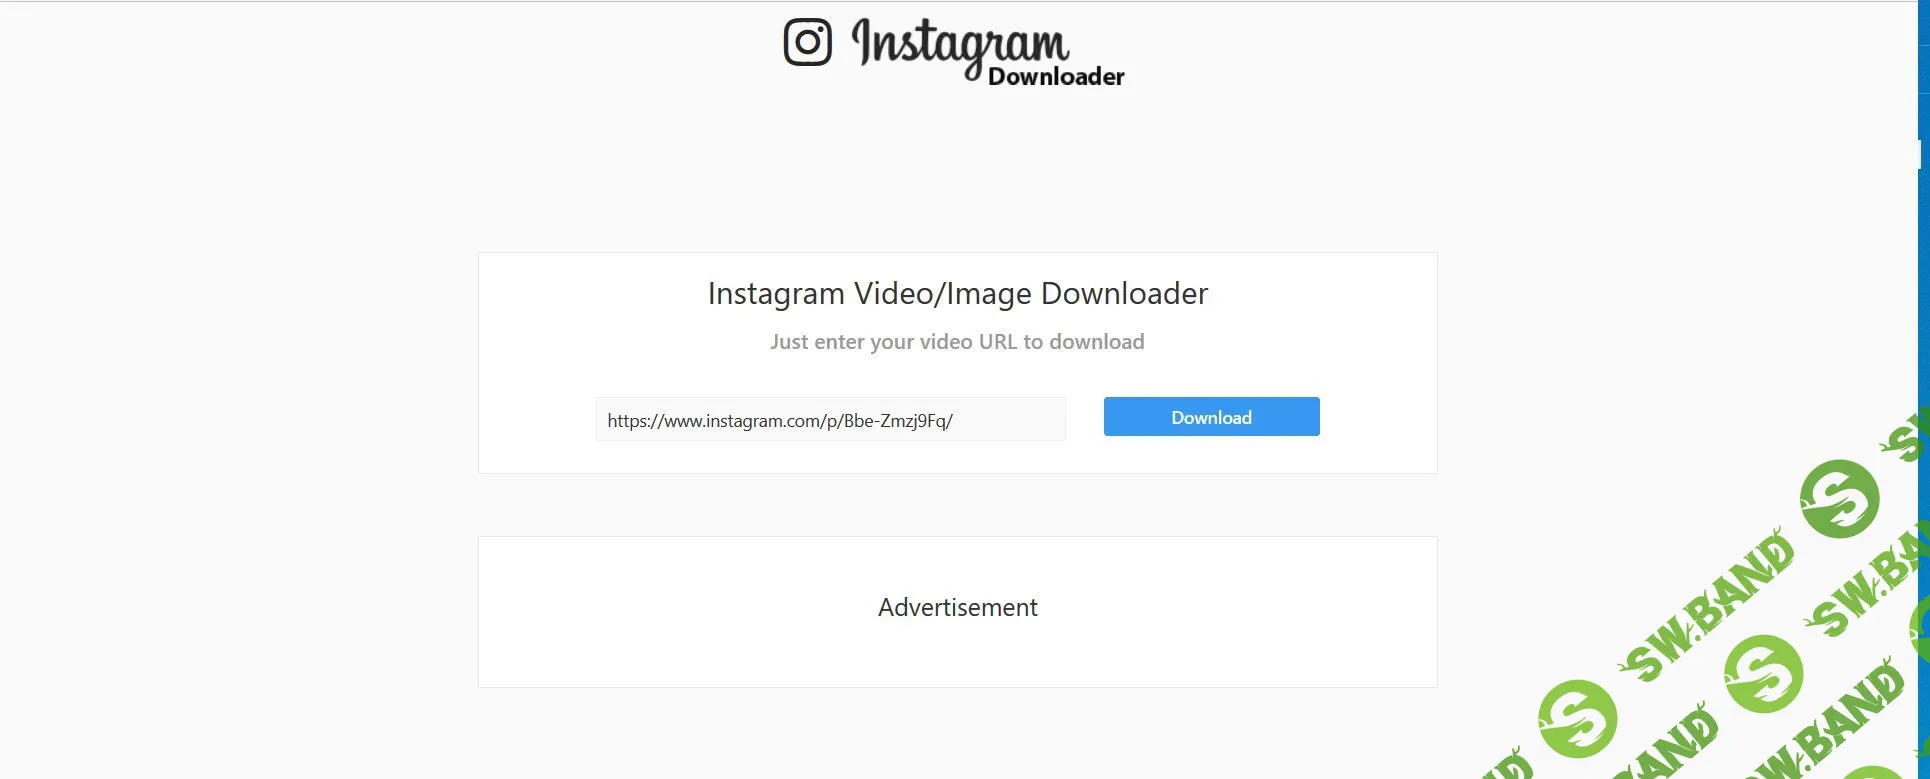 Instagram Video/Image Downloader with Ajax